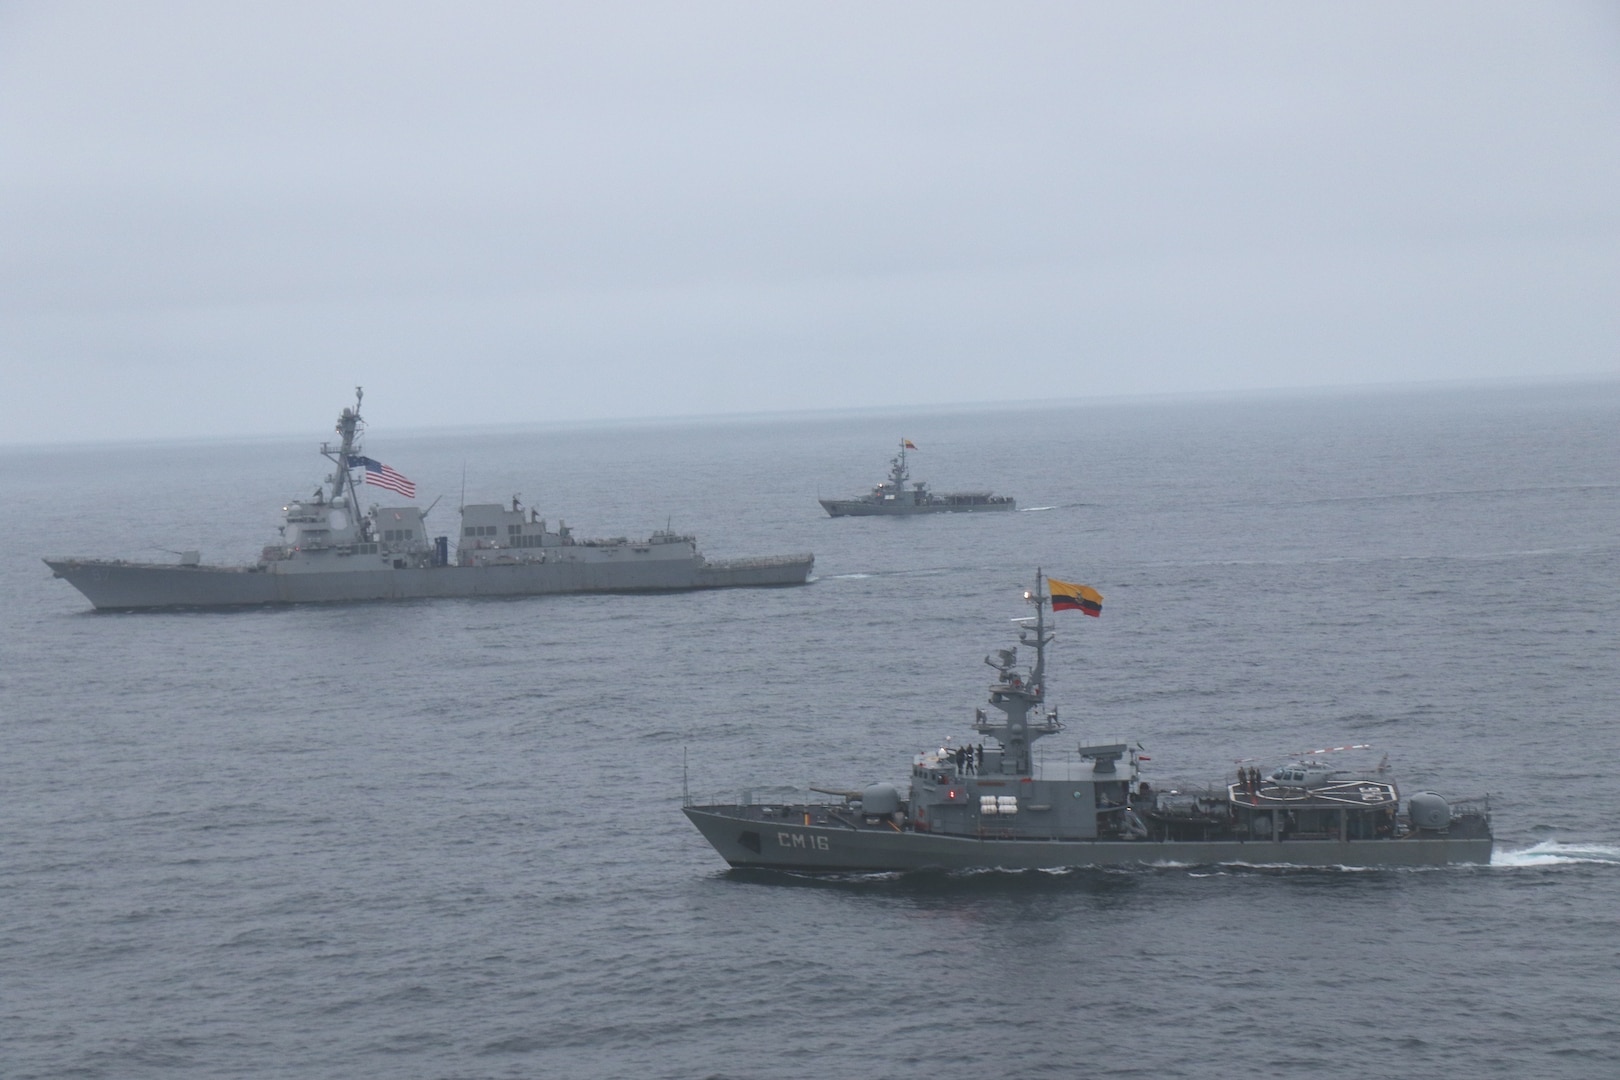 The Ecuadorian Navy corvette BAE Manabi and BAE Lojo conduct a passing exercise with USS Halsey.